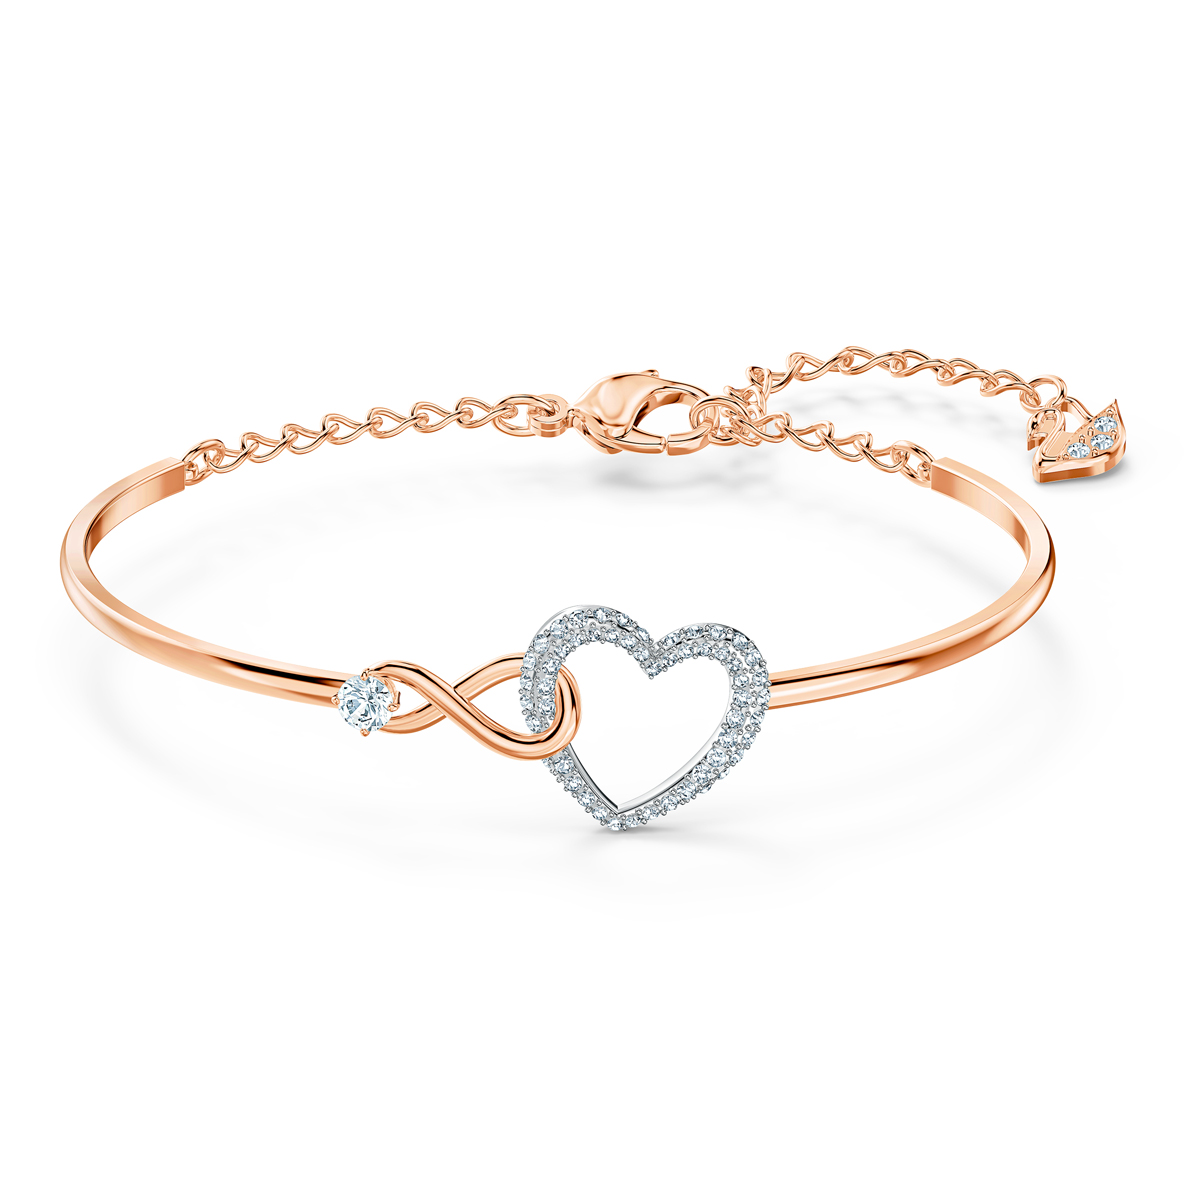 Swarovski Crystal Gold Infinity Heart Bangle Bracelet